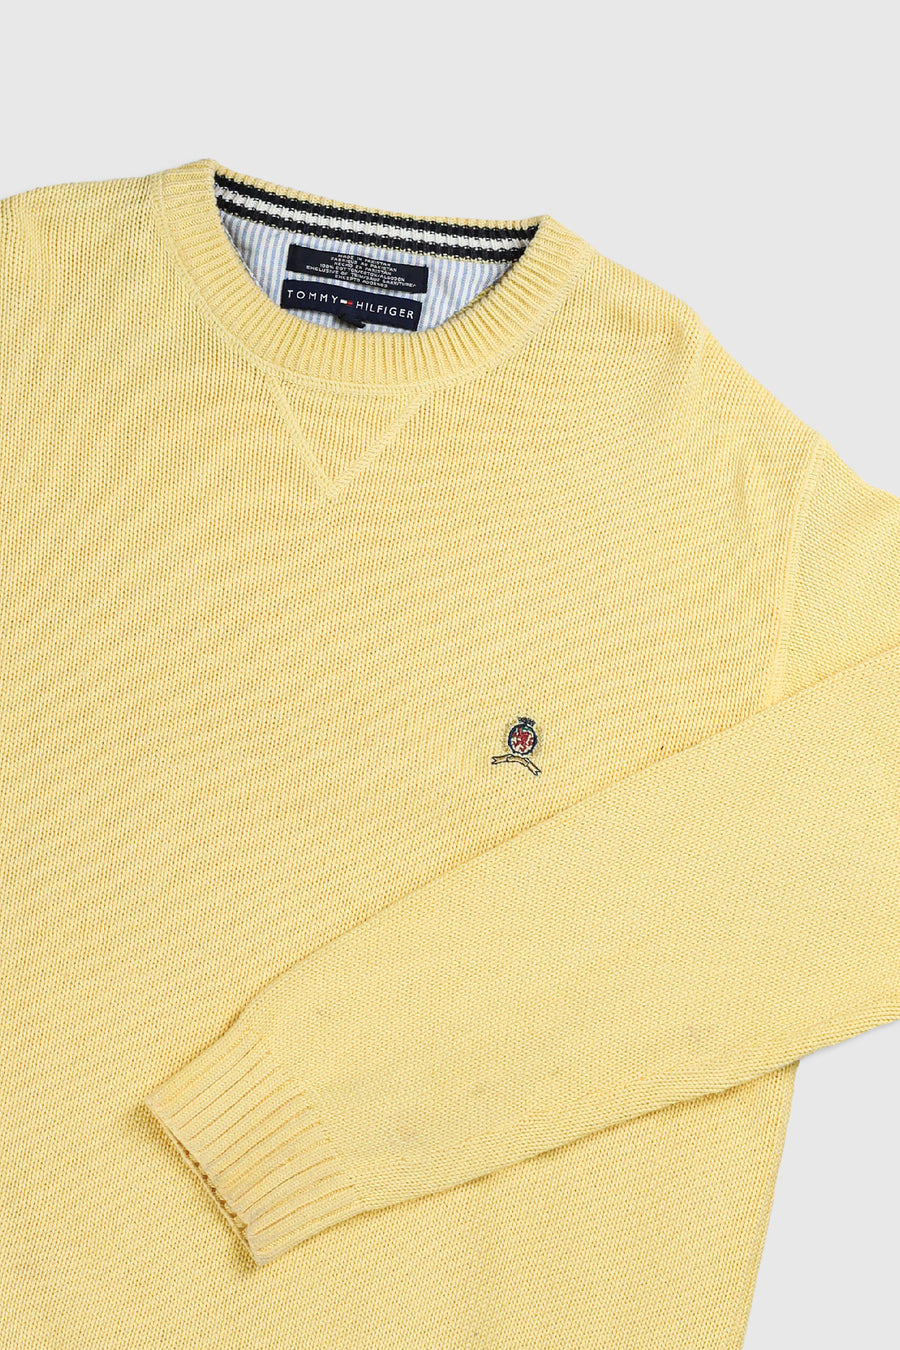 Vintage Tommy Sweater